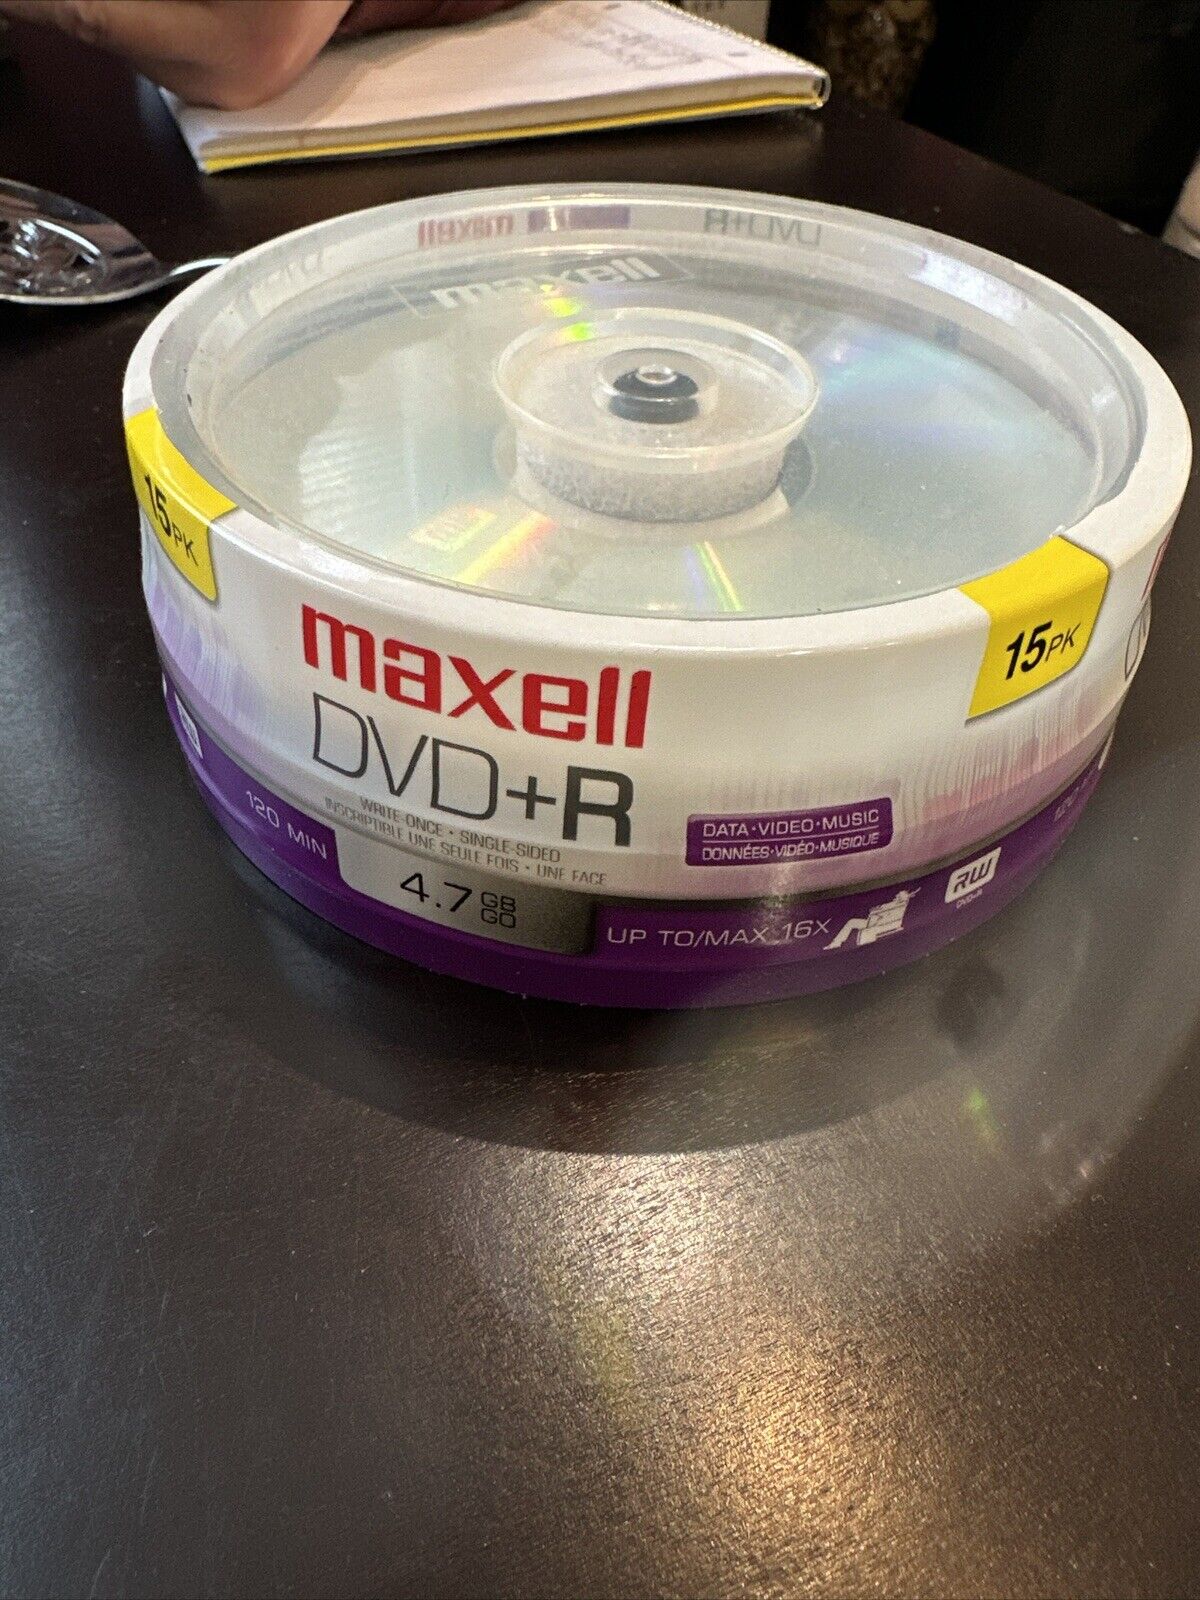 Maxell New DVD+R 15pk 4.7 GB 120 Min Write Once W/16x Write Speed (S3-B)